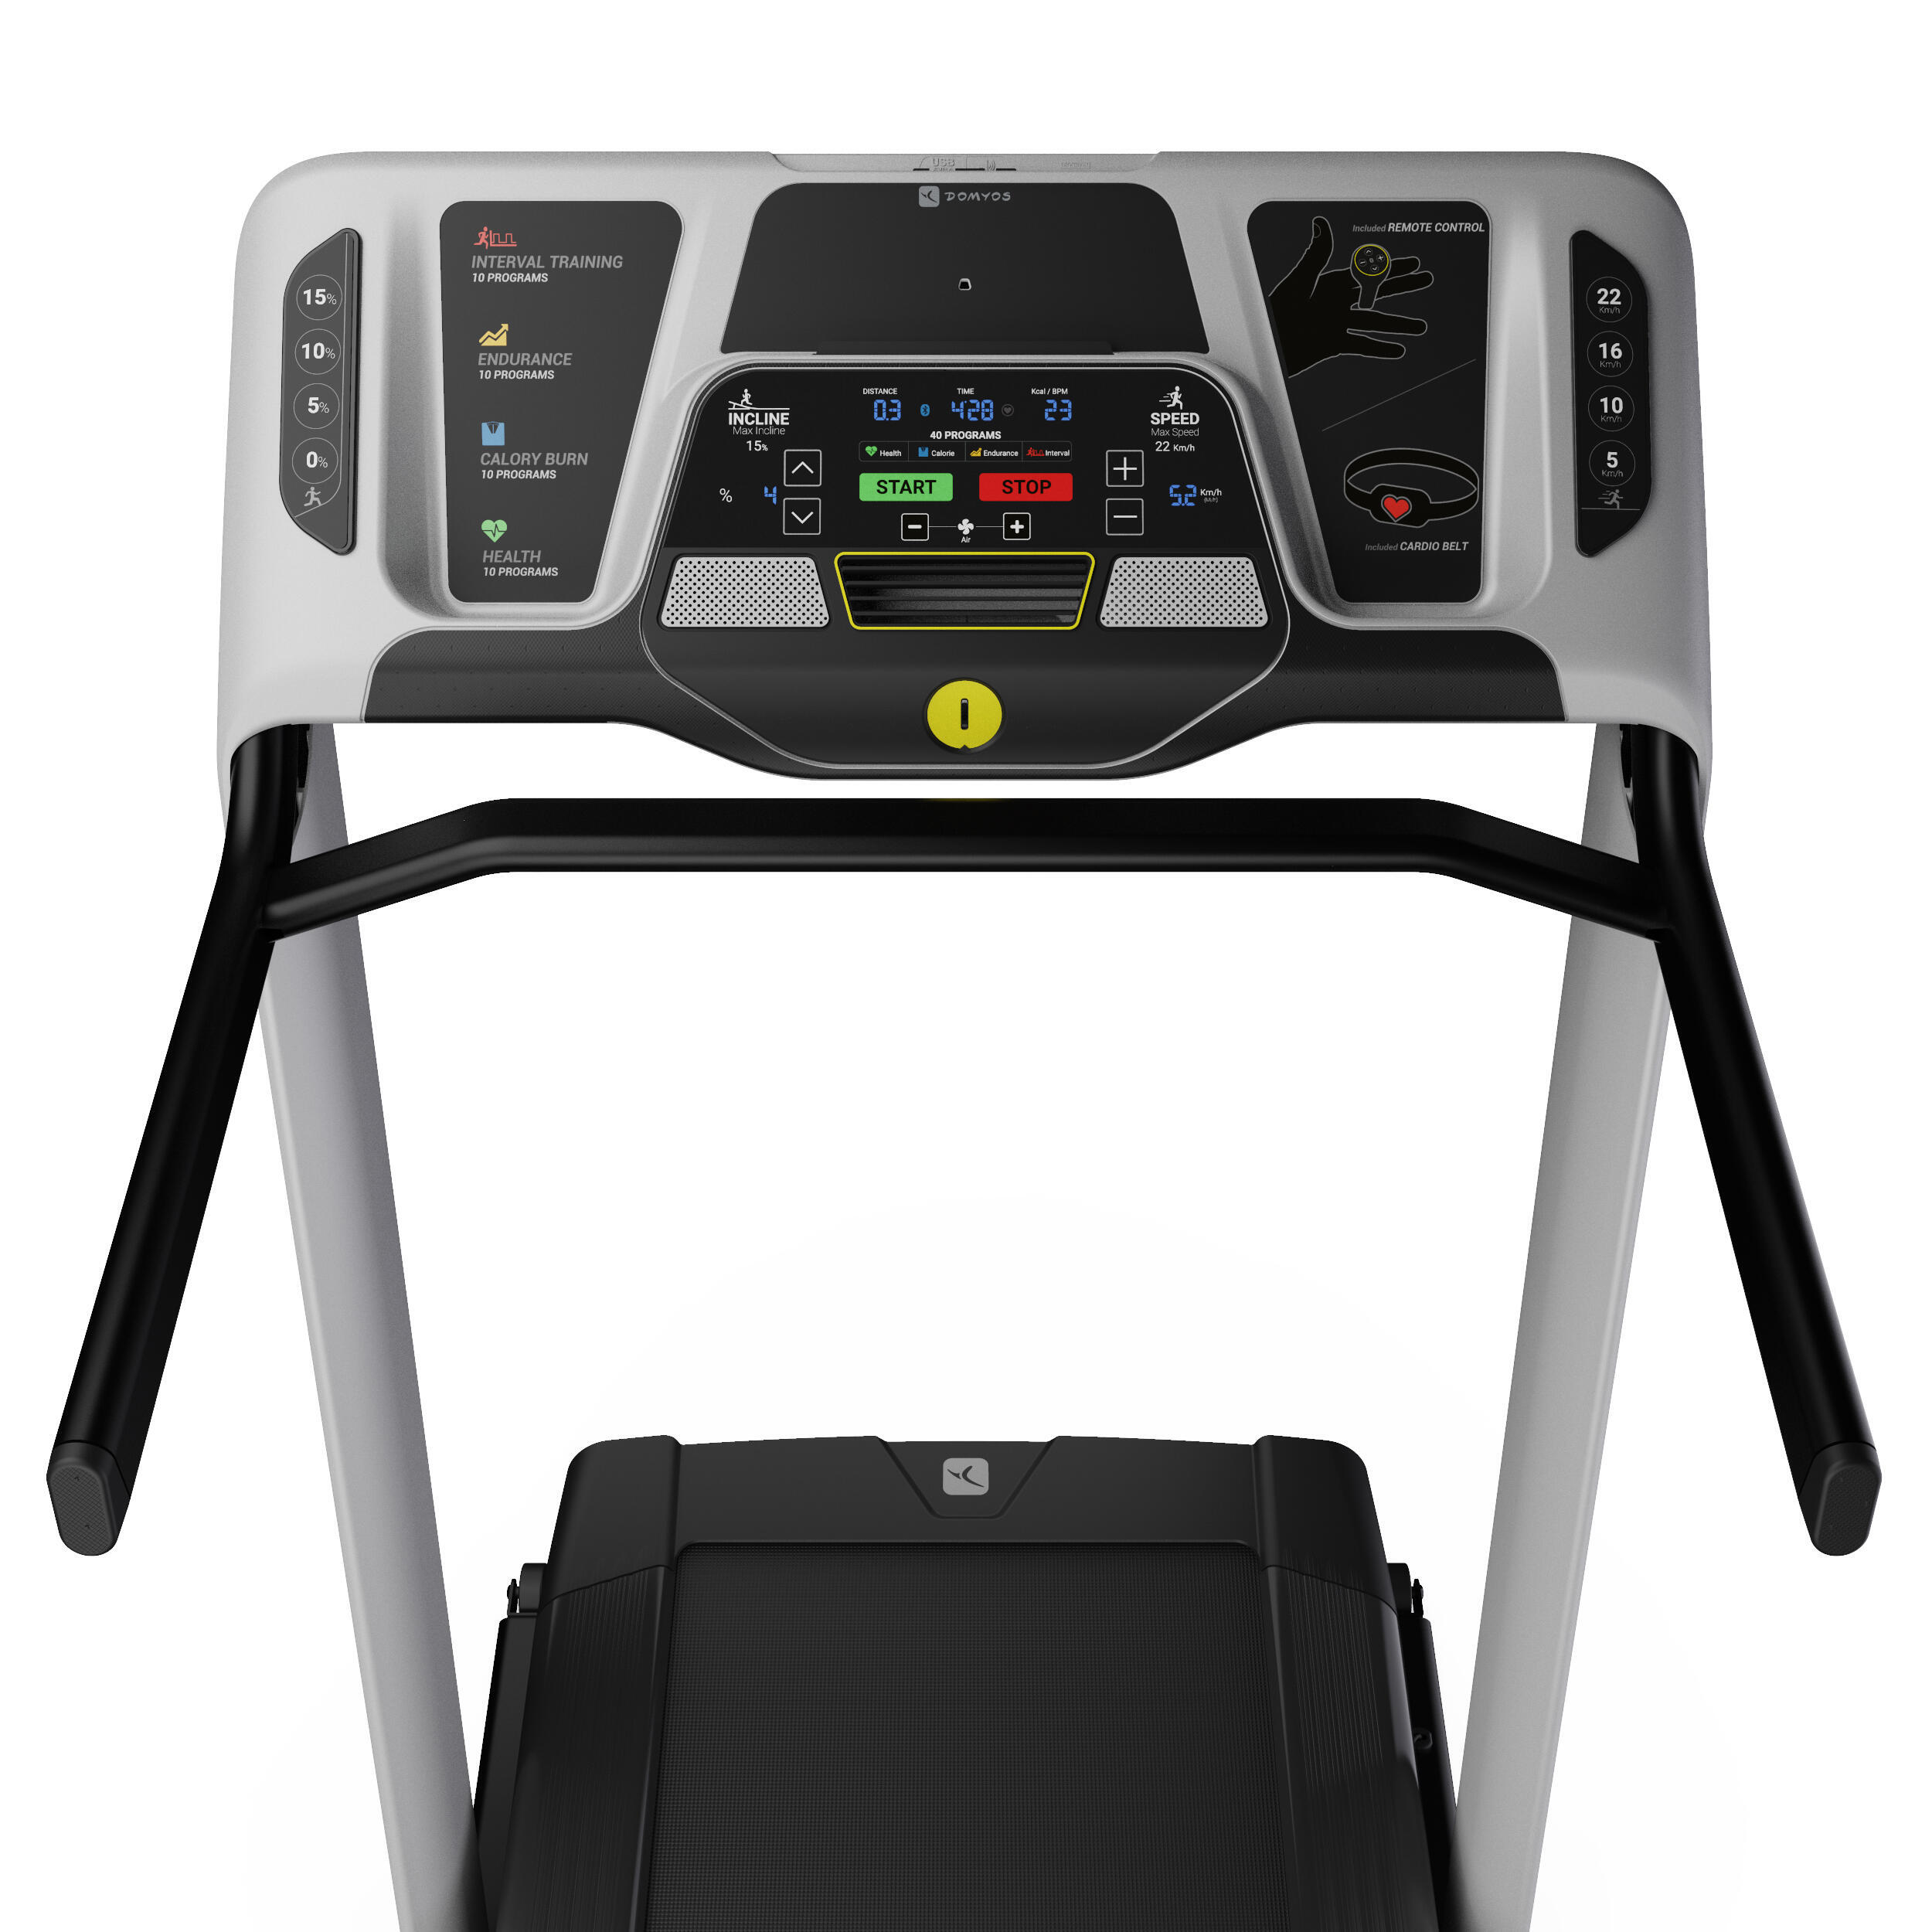 Smart Treadmill Intense Run - 22 km/h, 51⨯150 cm 4/5